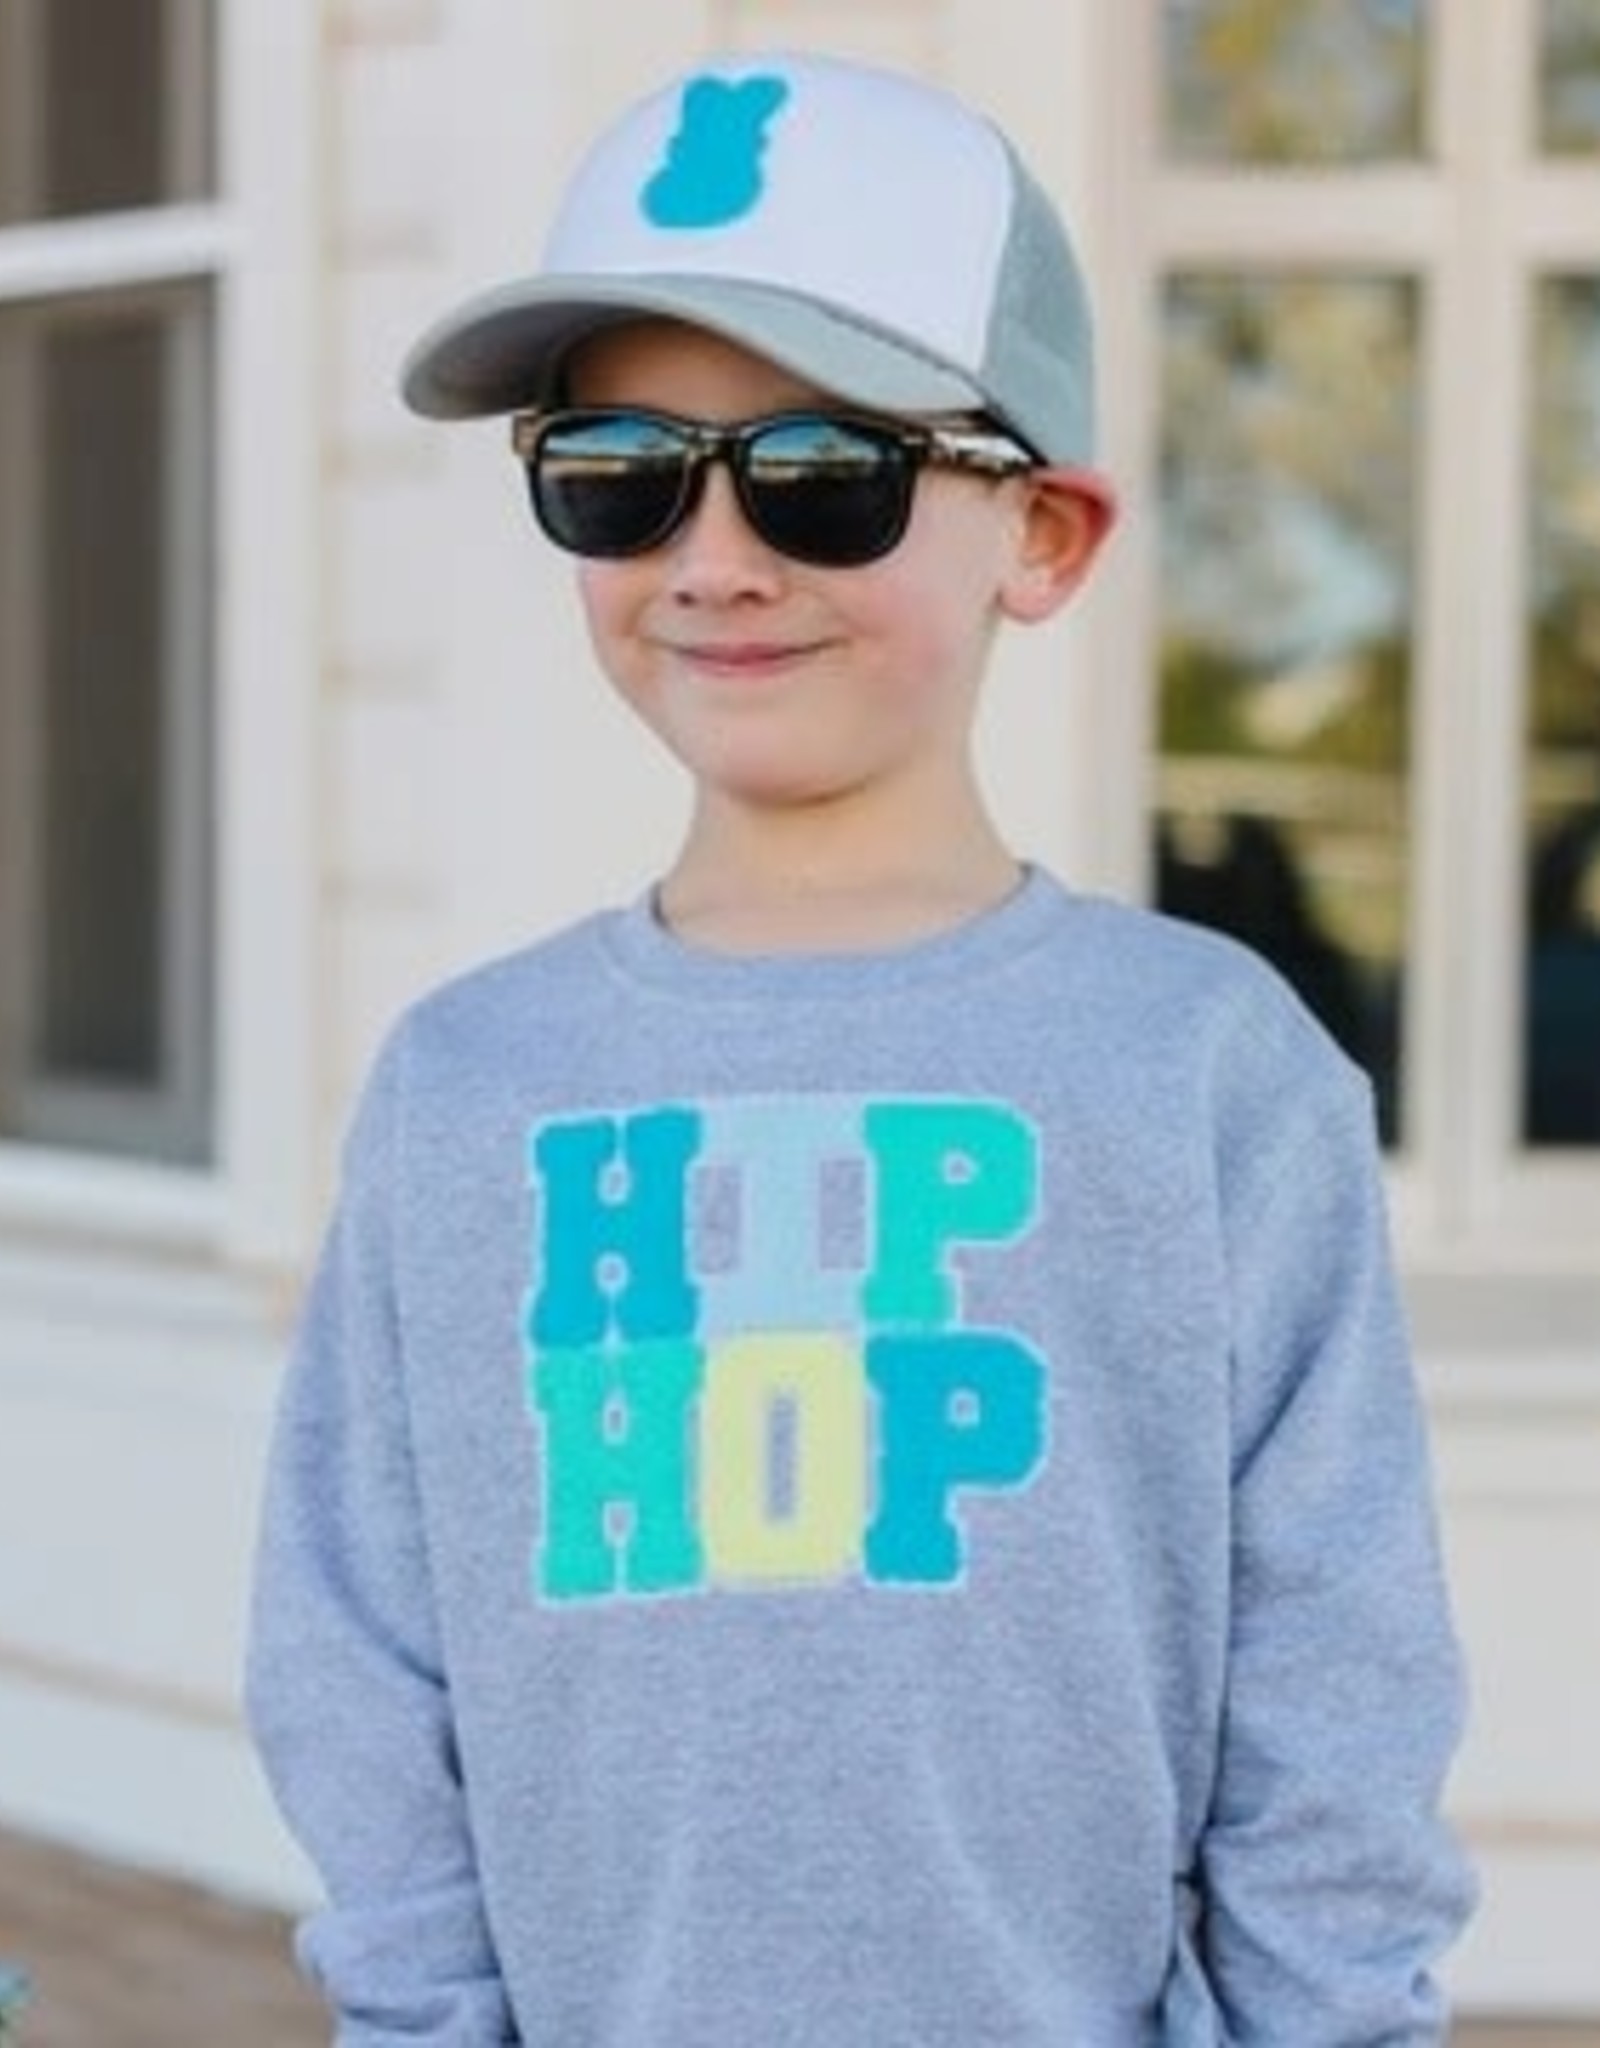 Hip Hop Patch L/S Sweatshirt Gray